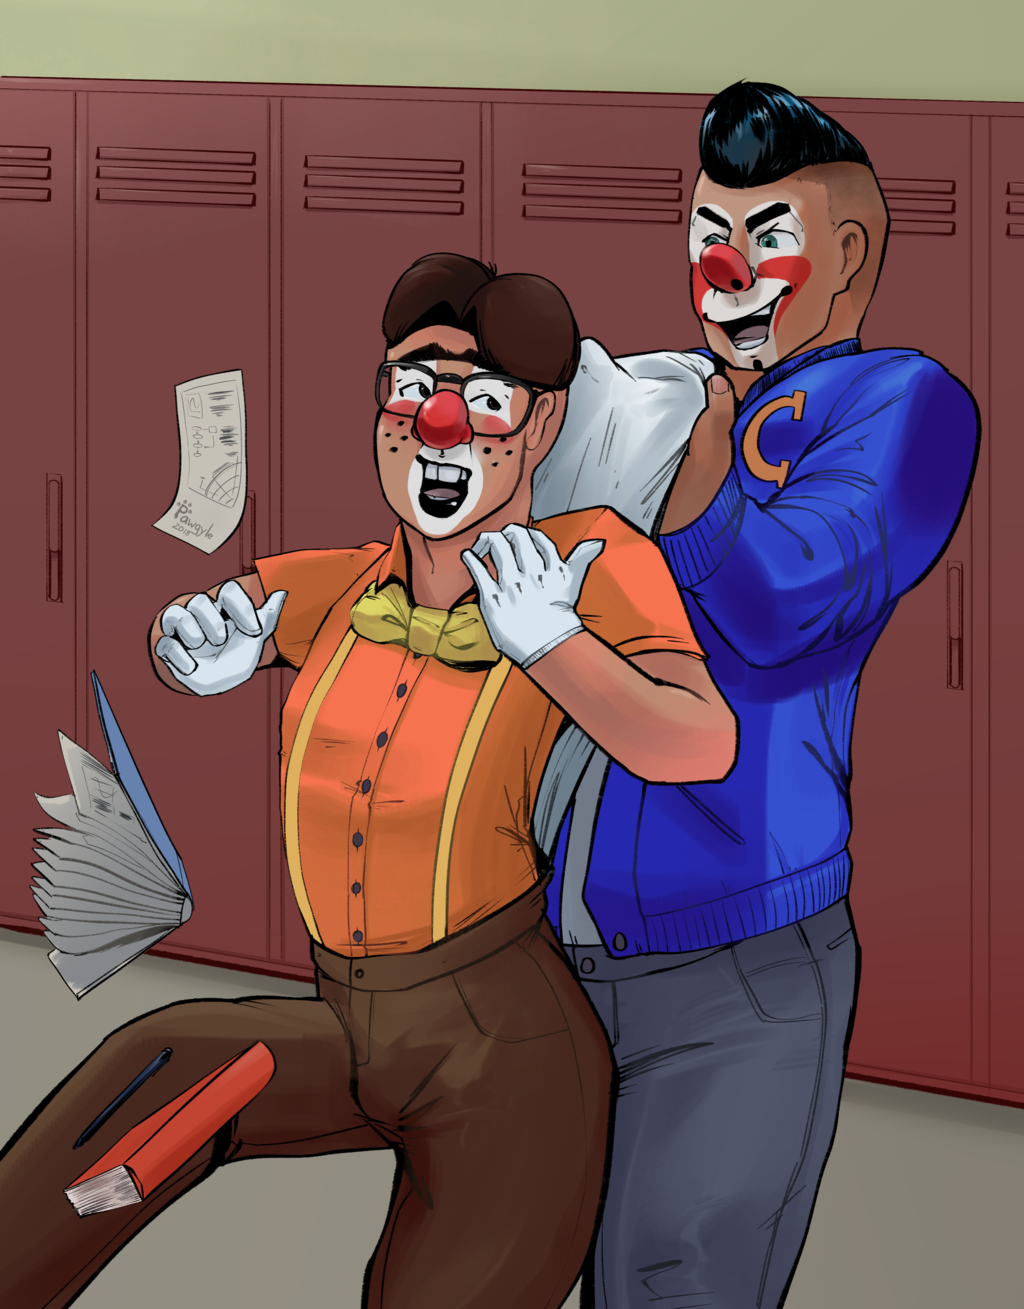 Clown bullying a nerd